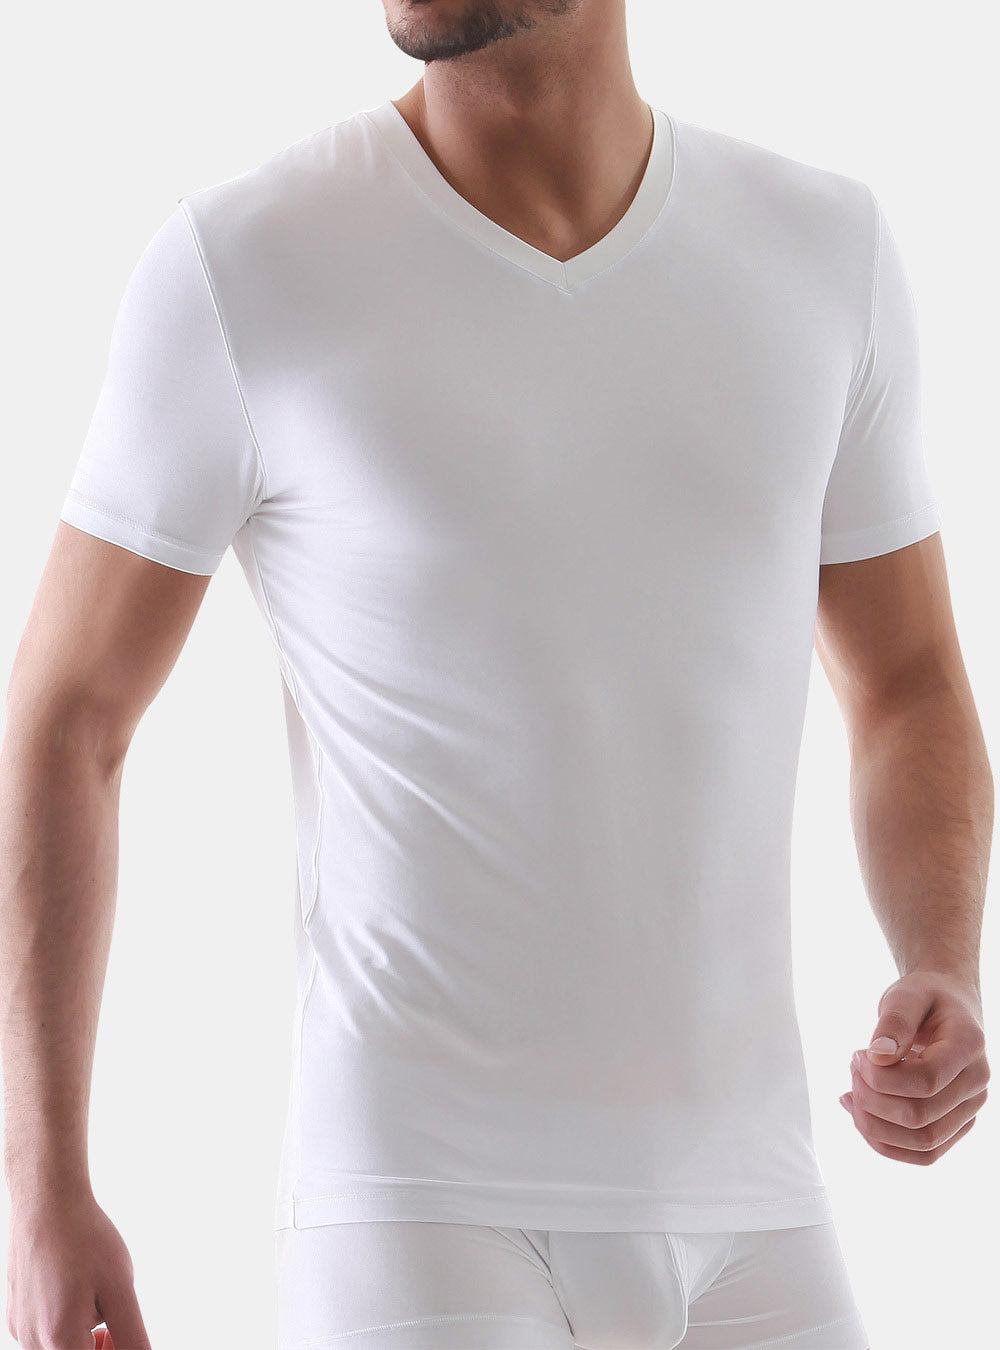 Modal+Spandex Sweatproof High Quality Deep V-neck Men Underwear